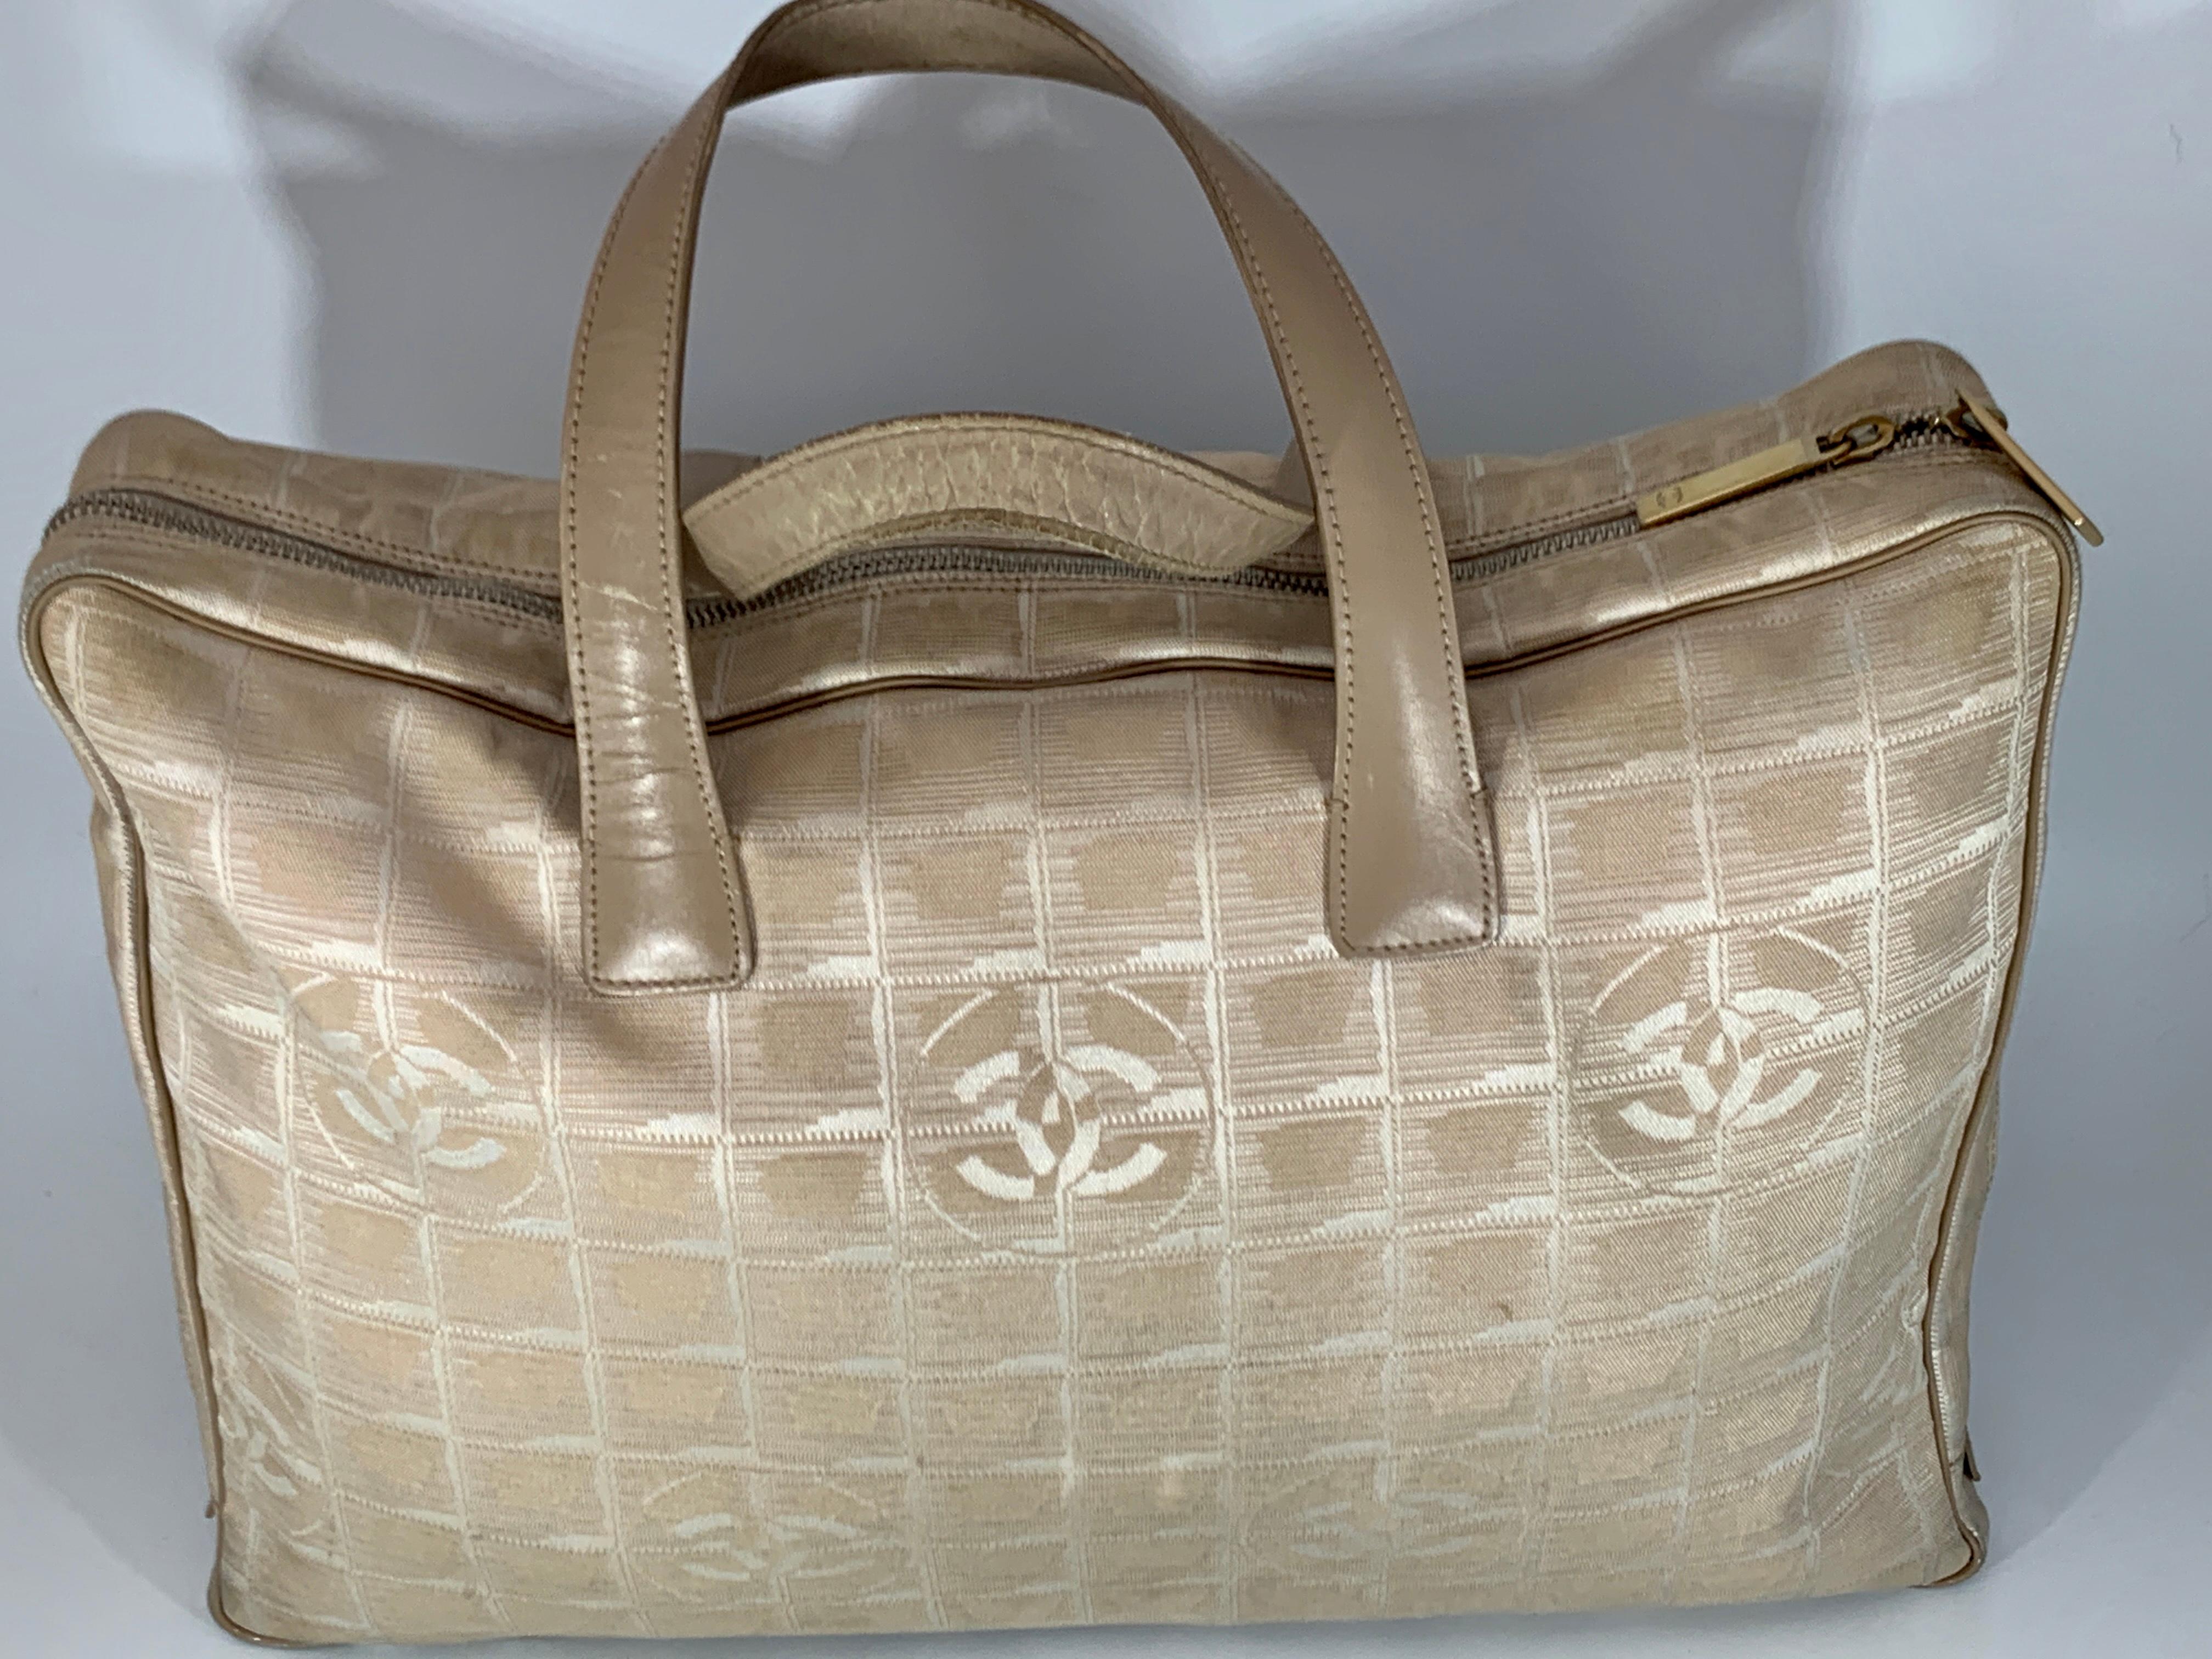  Chanel Handbag Bag New travel line Beige Nylon Jacquard Authentic Pre-Loved 1